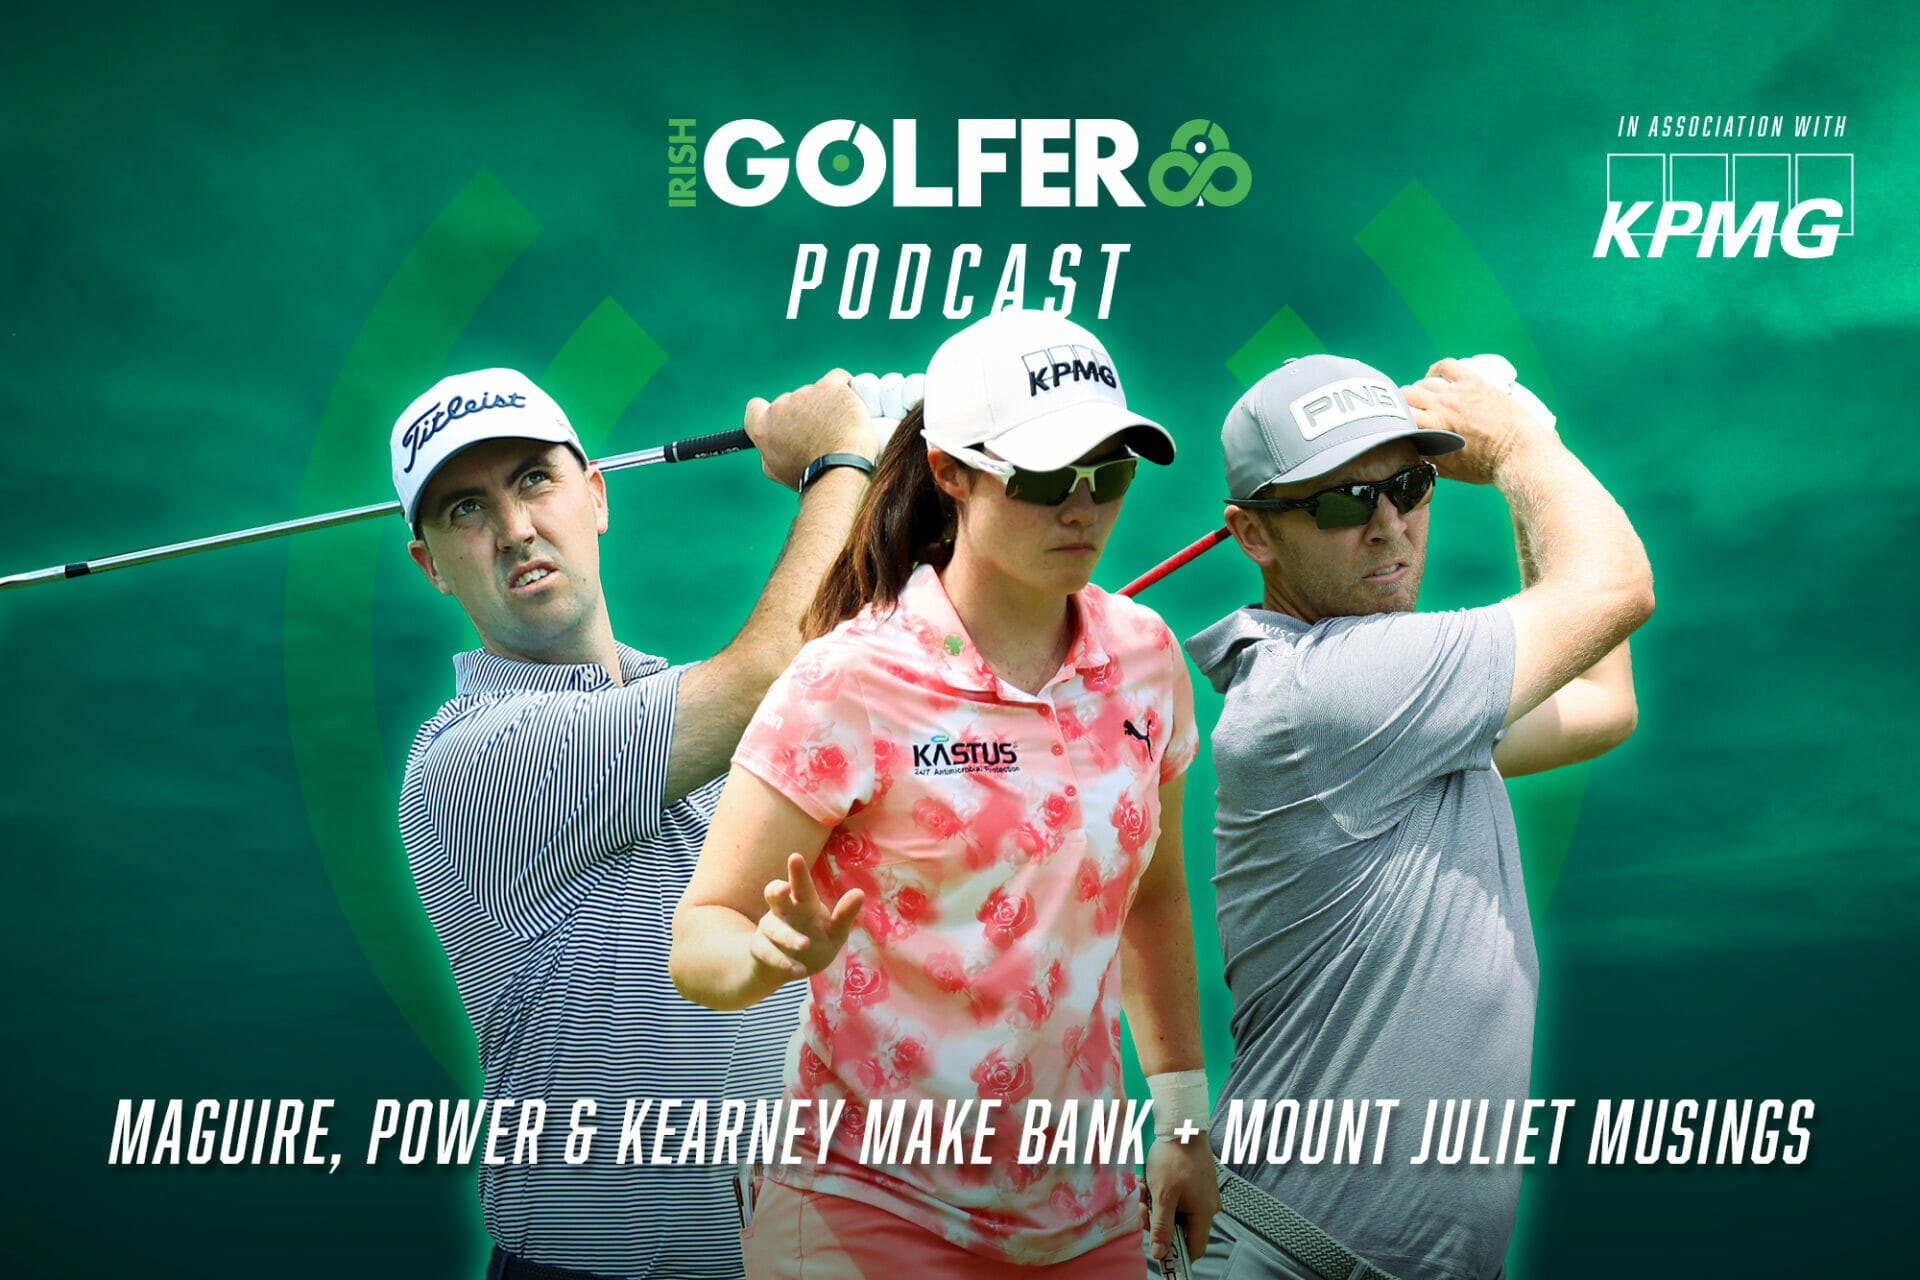 Podcast: Maguire, Power & Kearney make bank + Mount Juliet musings